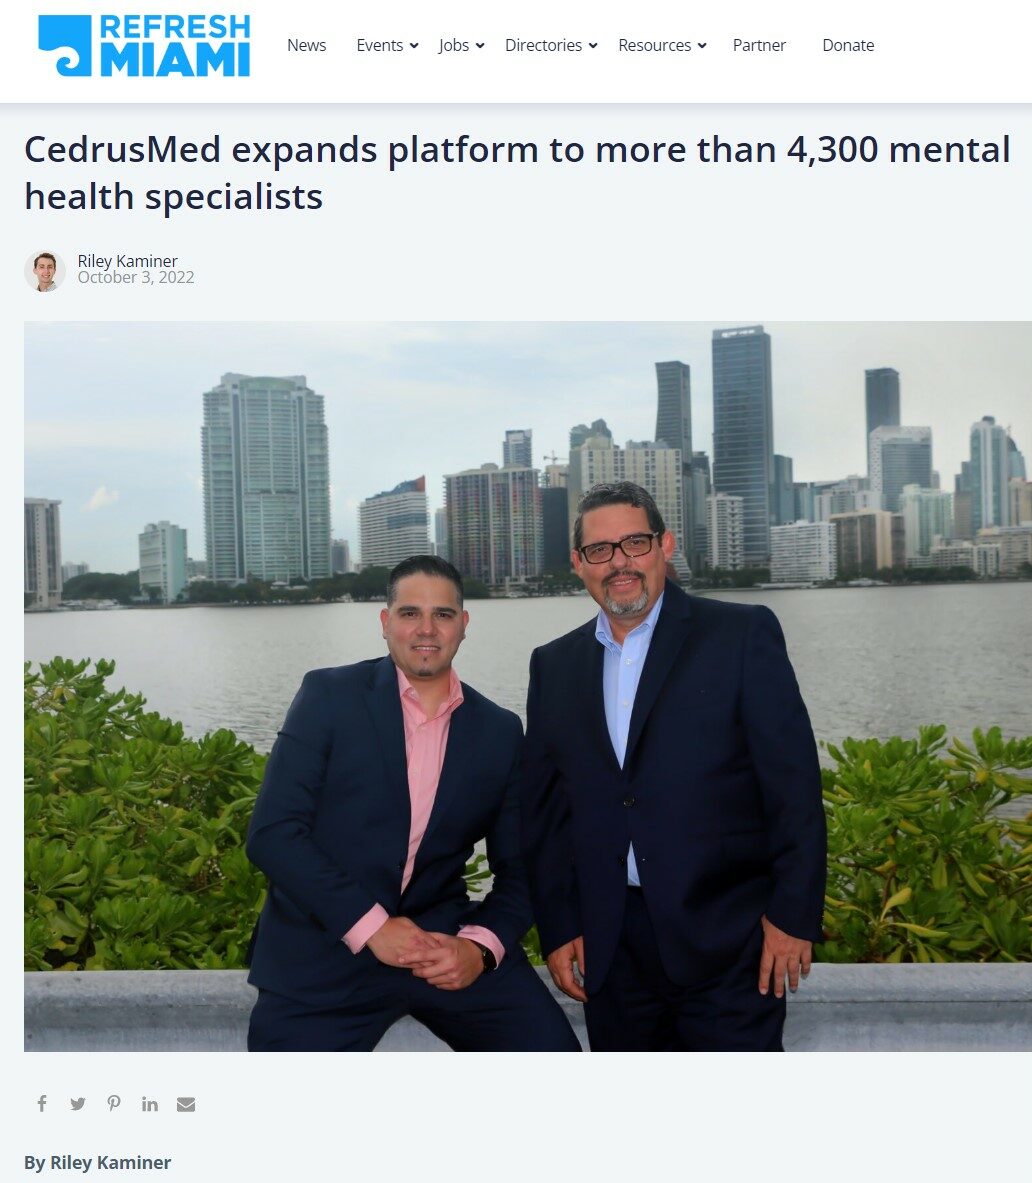 CedrusMed expands platform to more than 4,300 mental health specialists